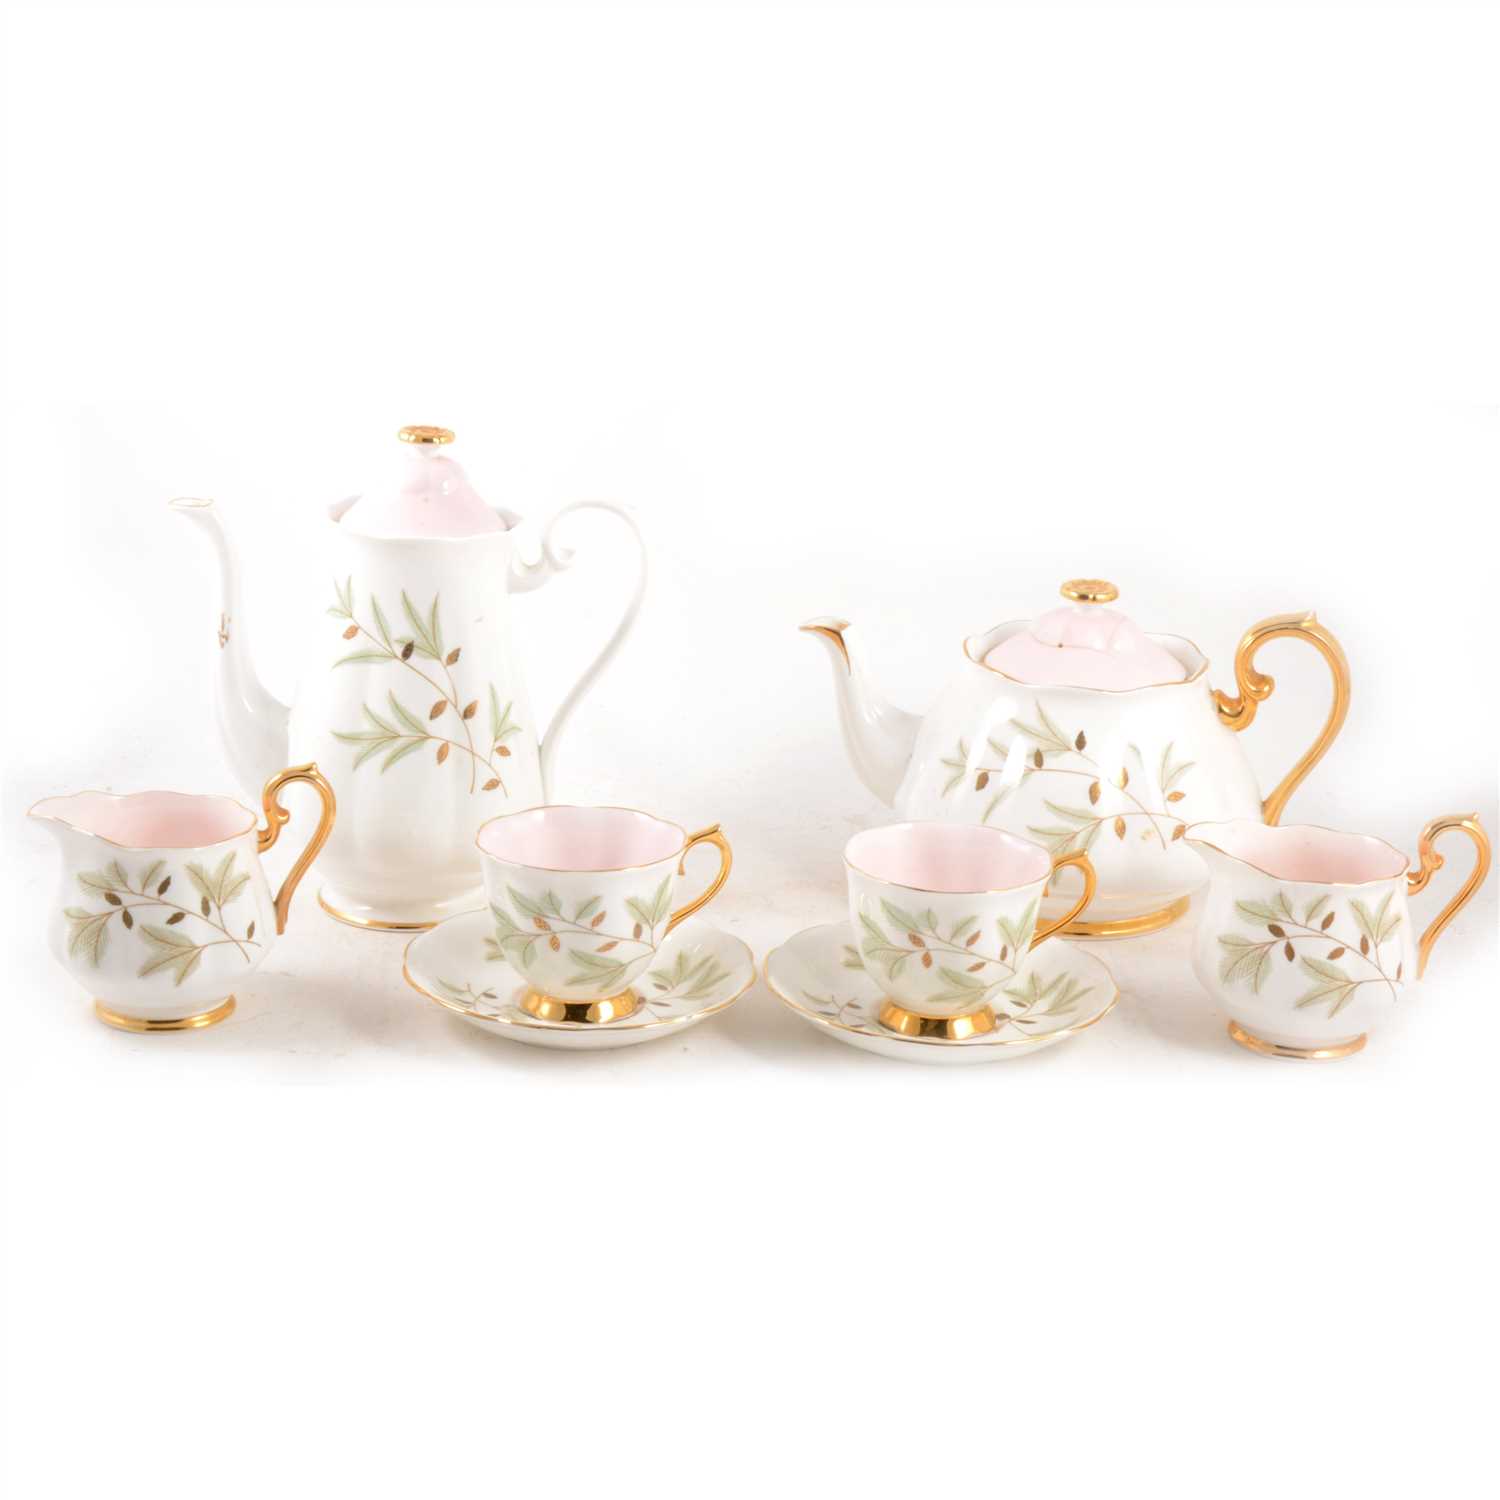 Lot 77 - Royal Albert china tea and coffee set, “Braemar” pattern.